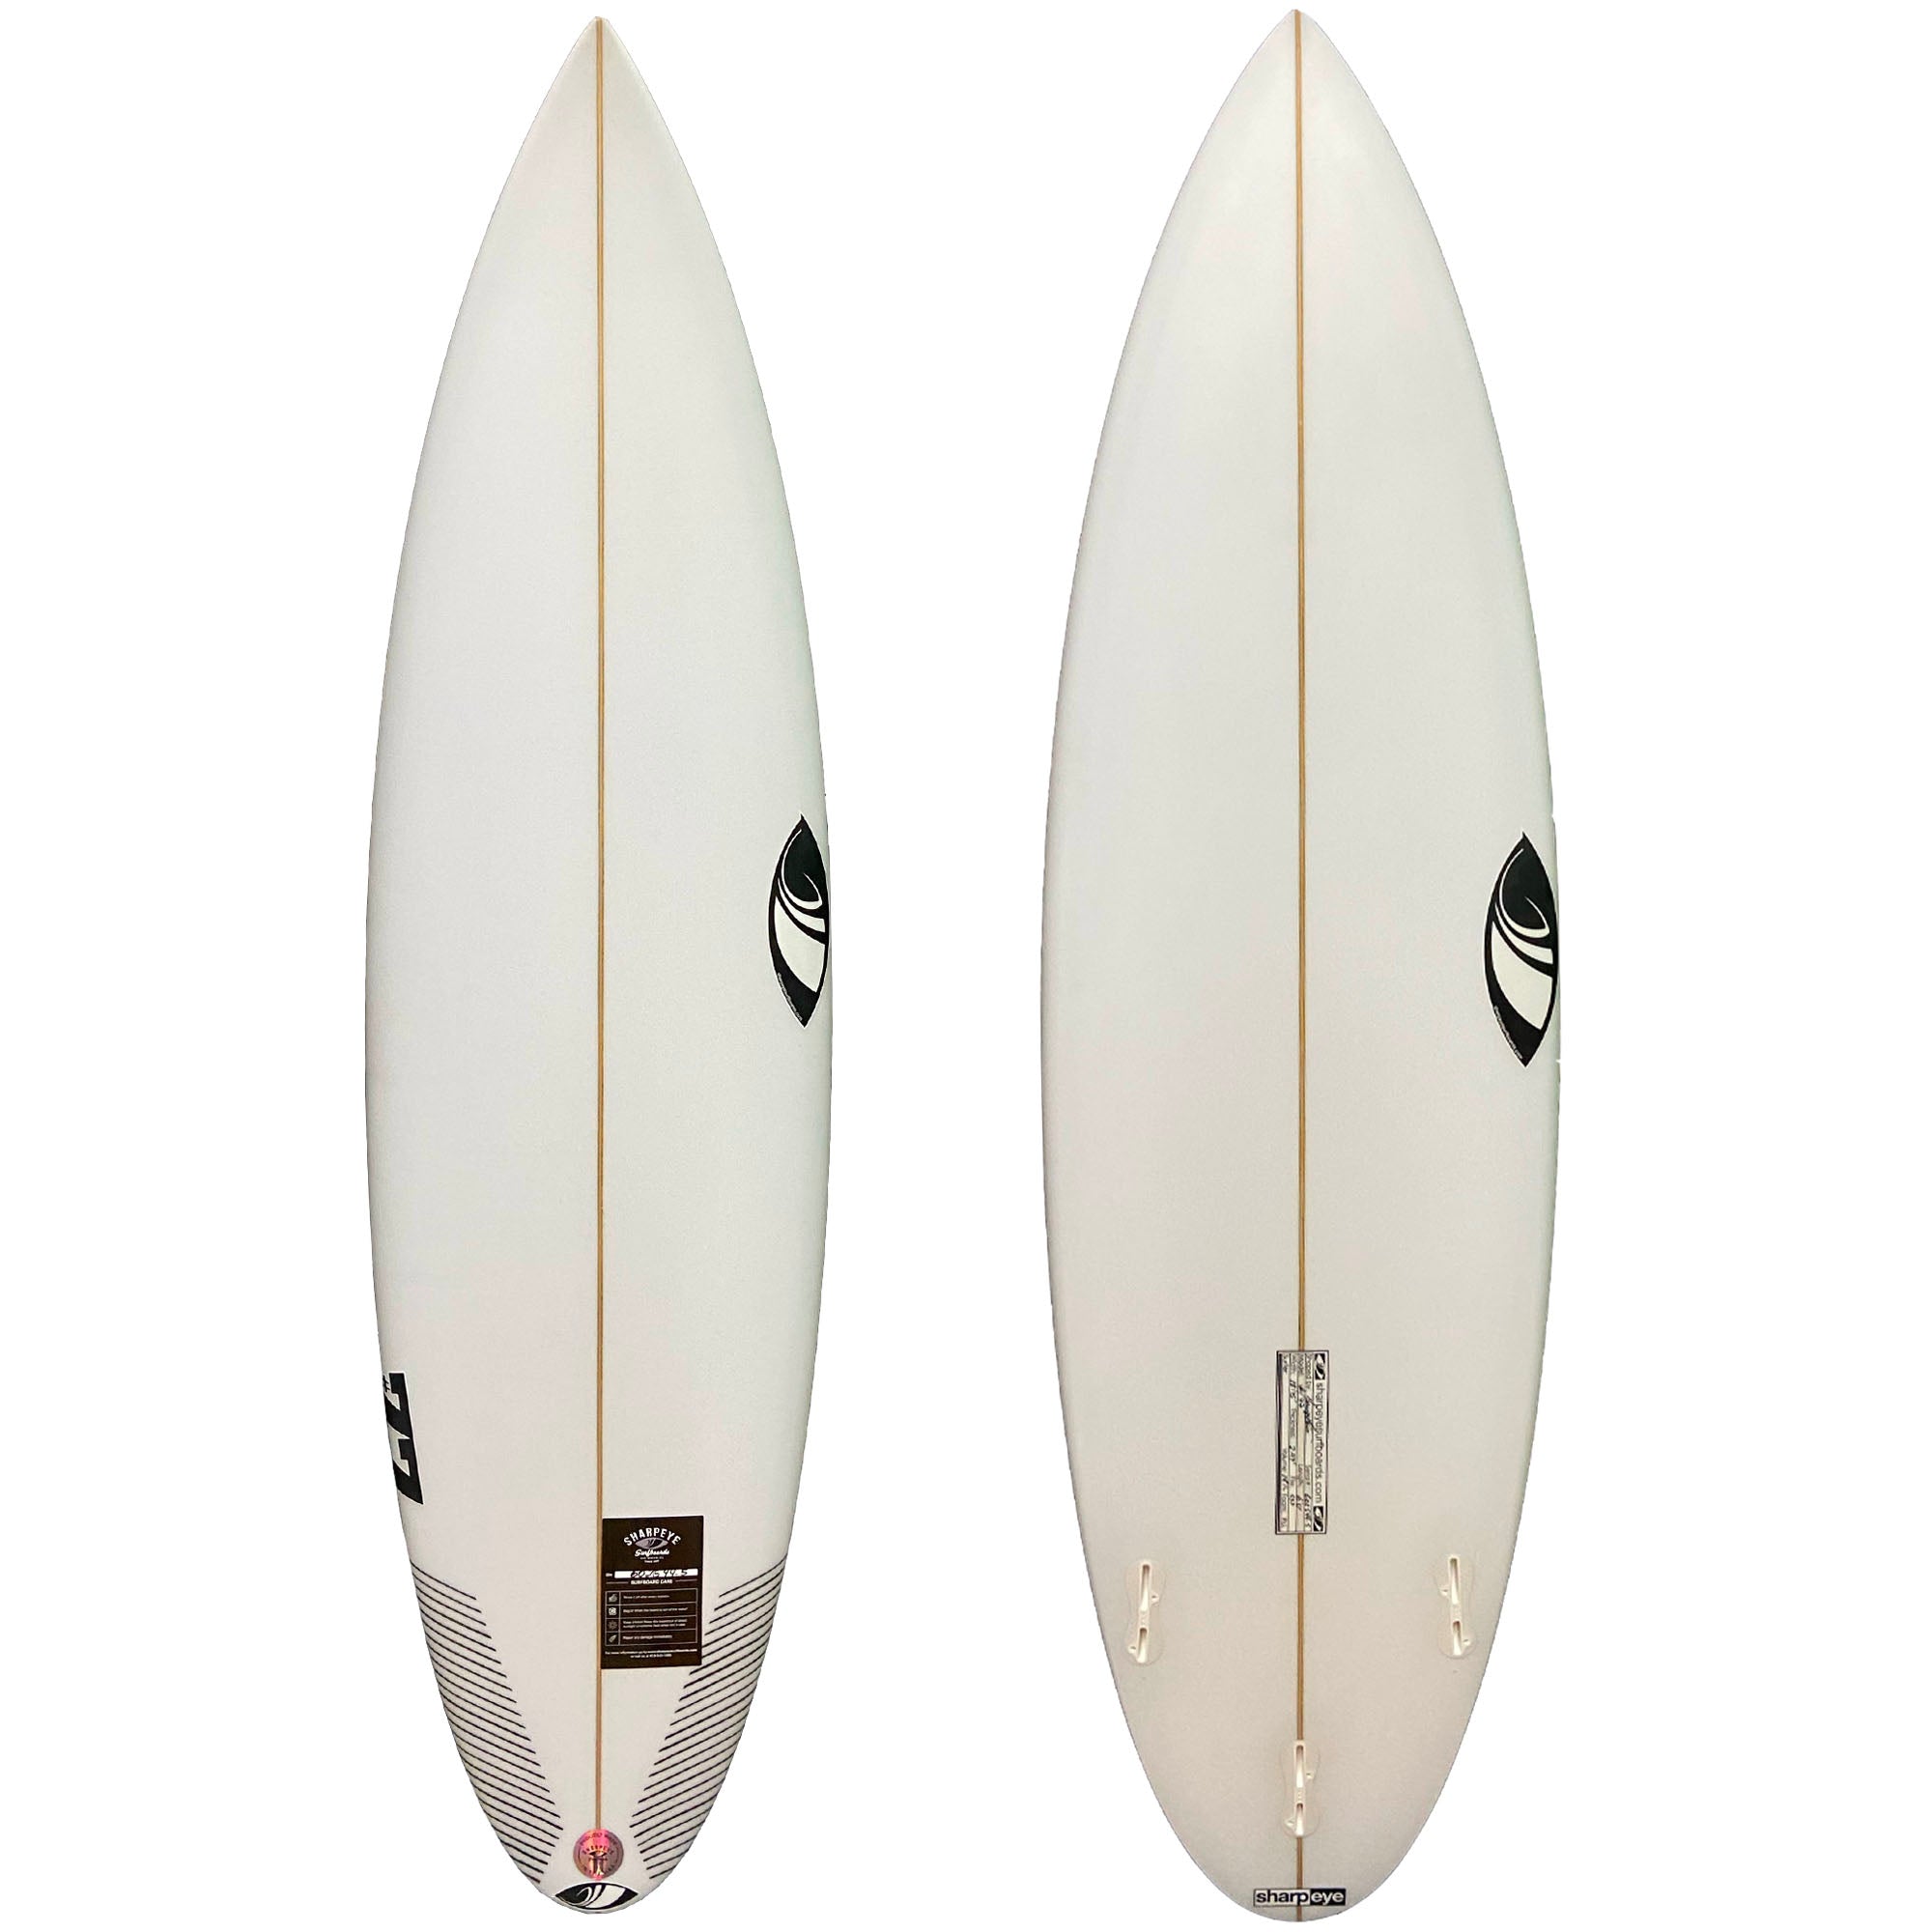 Sharp Eye #77 Surfboard - FCS II